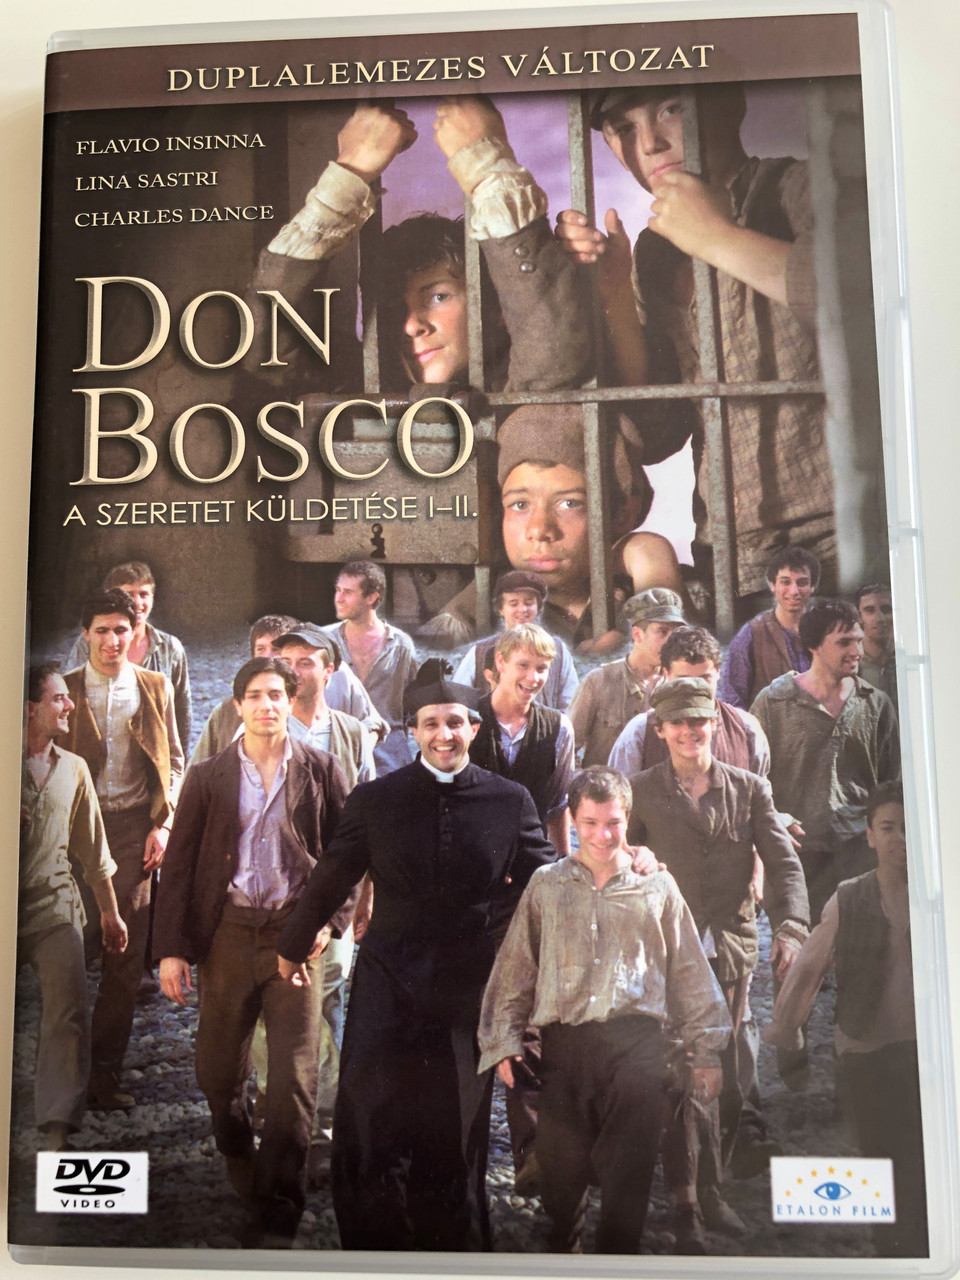 Don Bosco 2xDVD 2004 A szeretet küldetése I-II / Directed by Ludovico  Gasparini, Starring: Flavio Insinna, lina Sastri, Charles Dance, Michael  Finerty - bibleinmylanguage